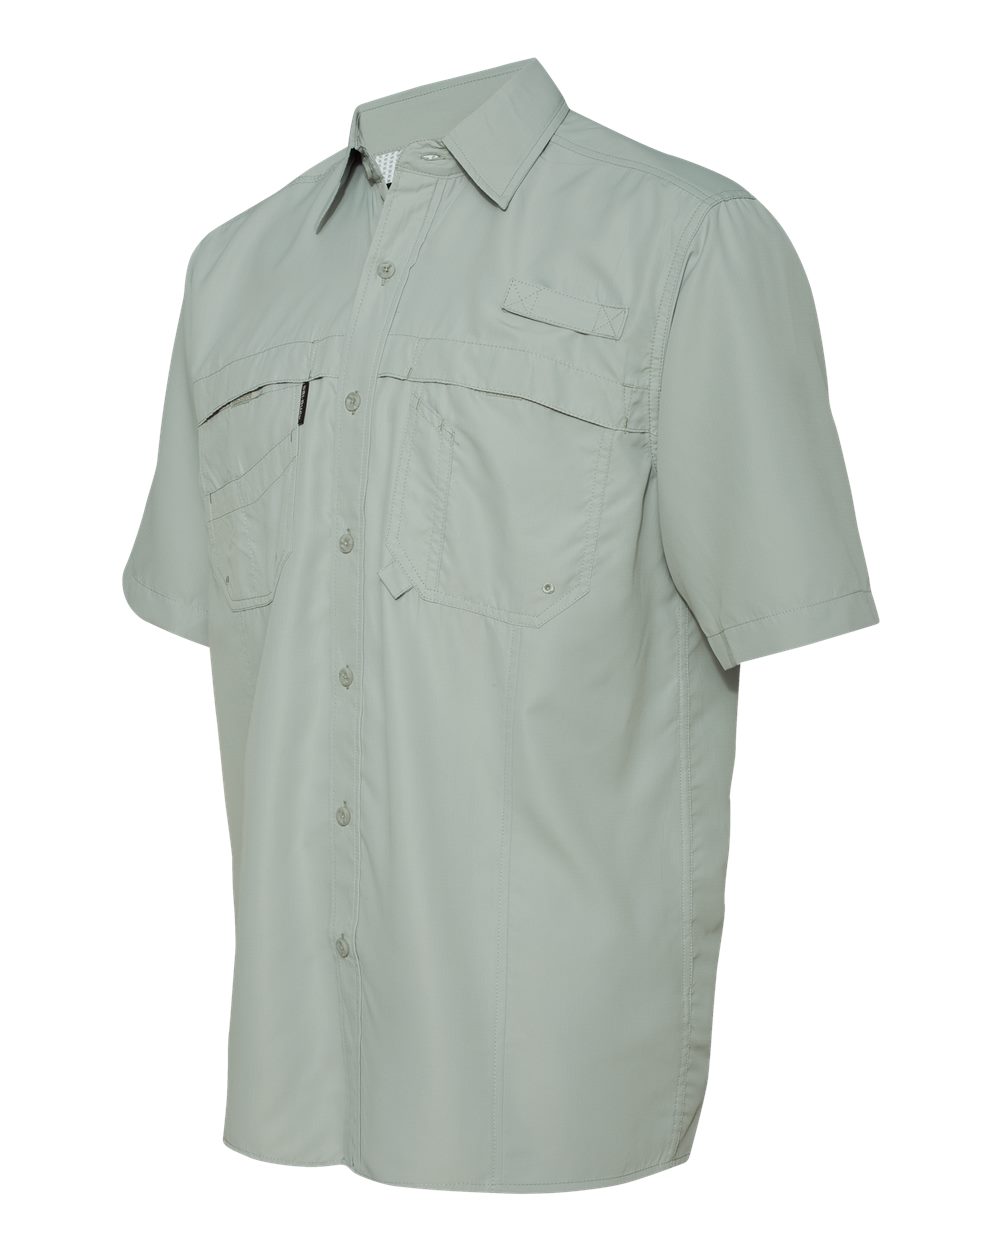 DRI DUCK - Catch Short Sleeve Fishing Shirt - 4406 - Century Marketing, Inc.